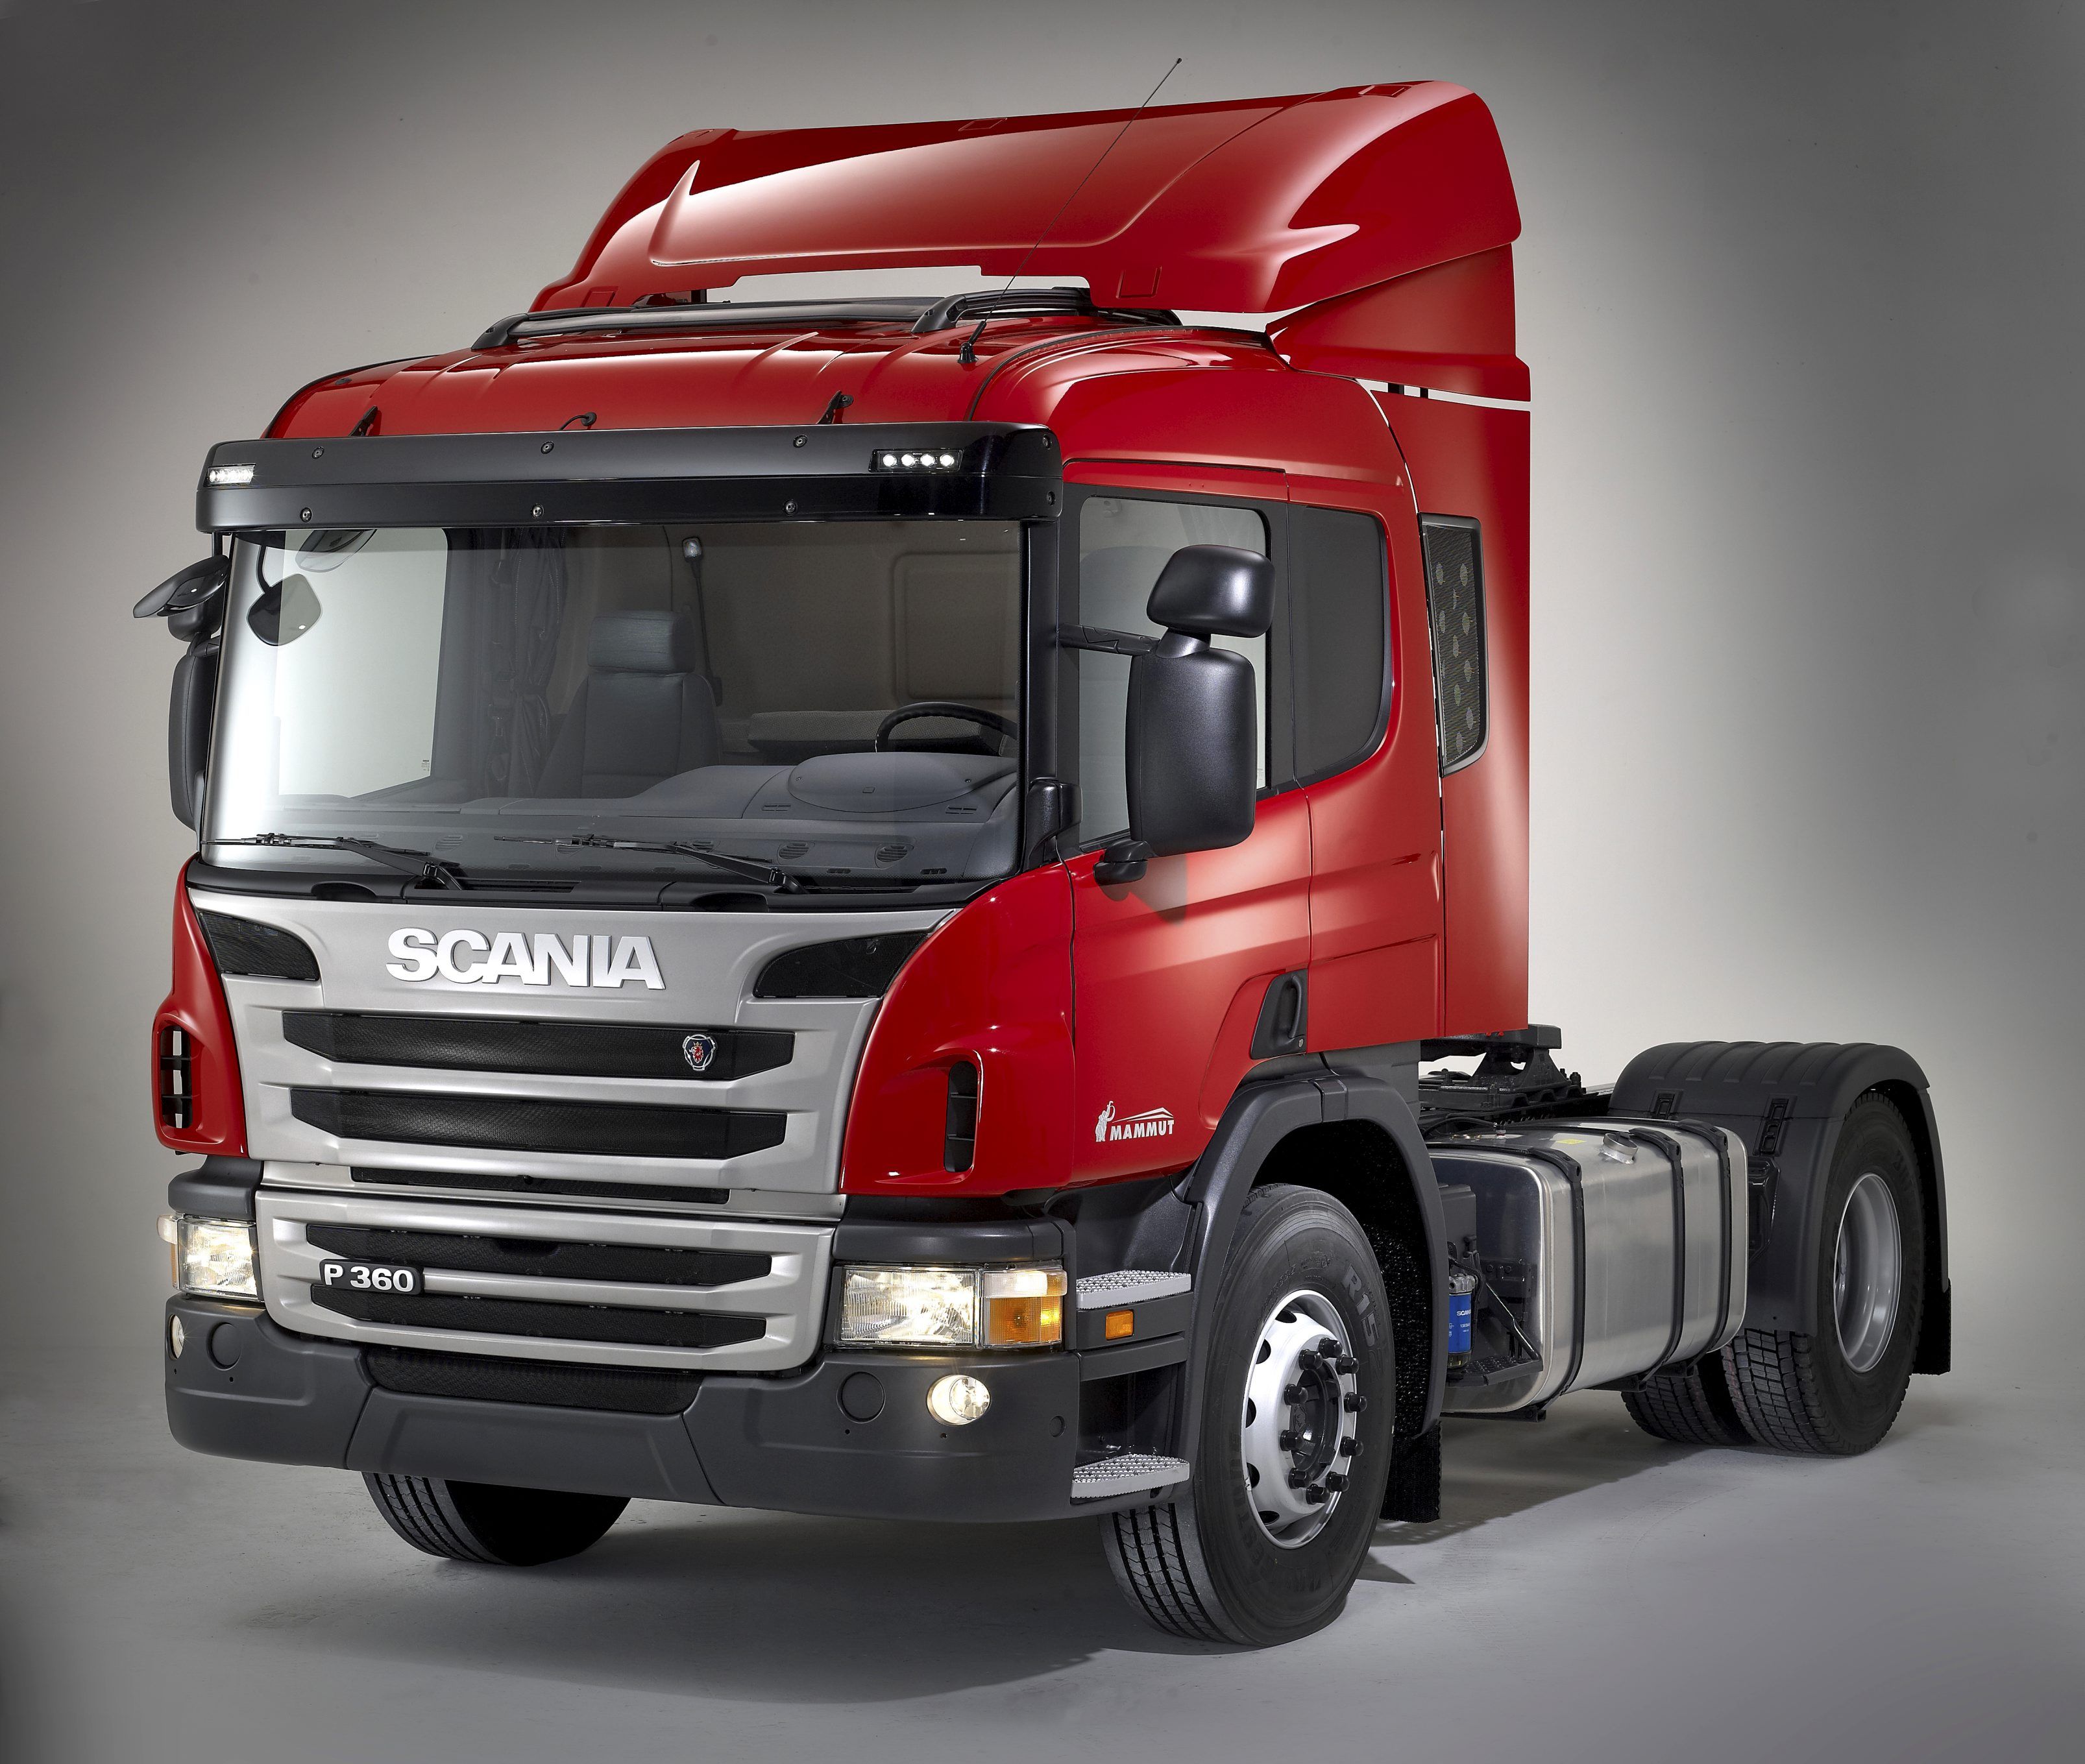 Scania p series. Скания p440 тягач. Скания p360la4x2hna. Тягач Scania p360. Скания тягач п 360.